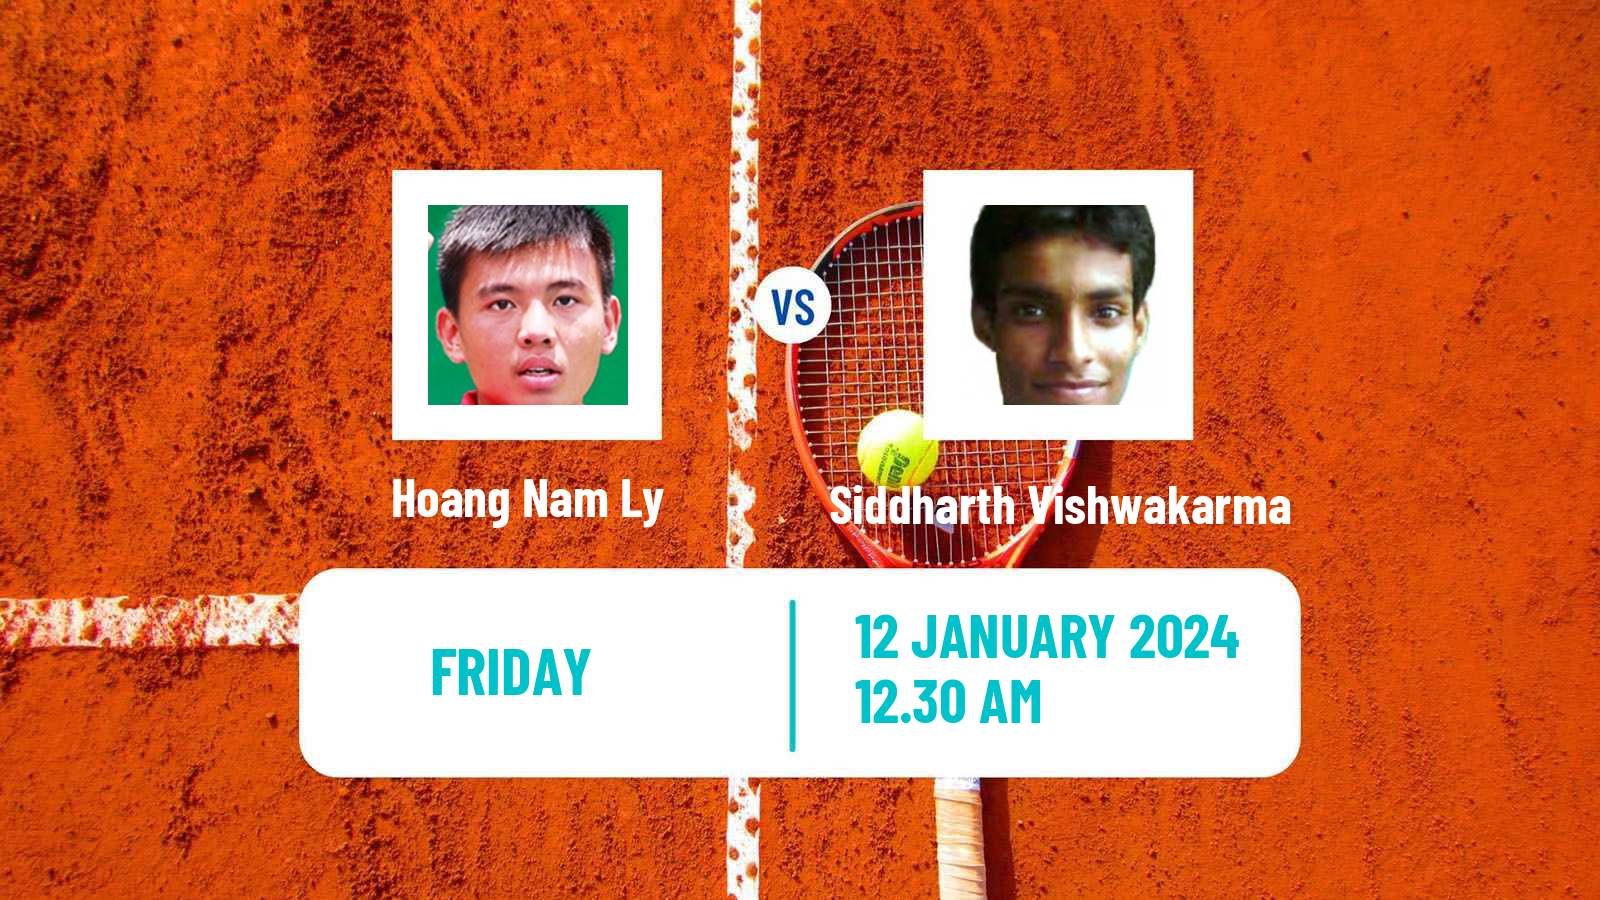 Tennis ITF M25 Mandya Men Hoang Nam Ly - Siddharth Vishwakarma